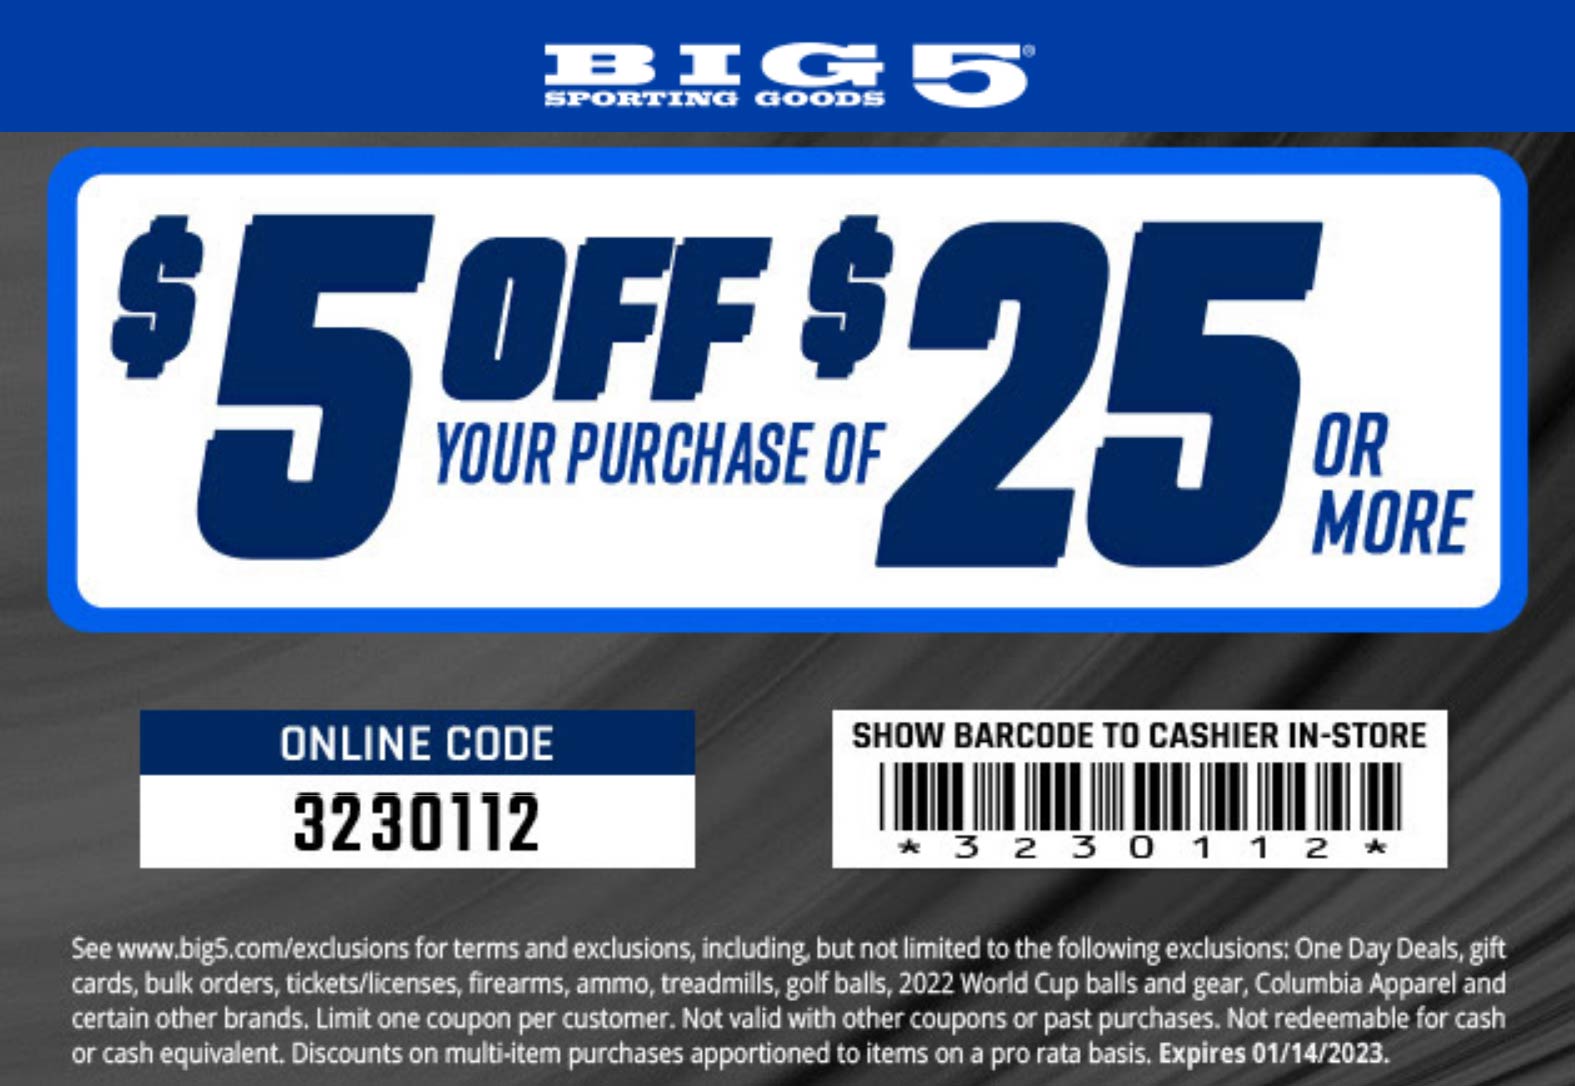 Big 5 stores Coupon  $5 off $25 at Big 5 sporting goods, or online via promo code 3230112 #big5 